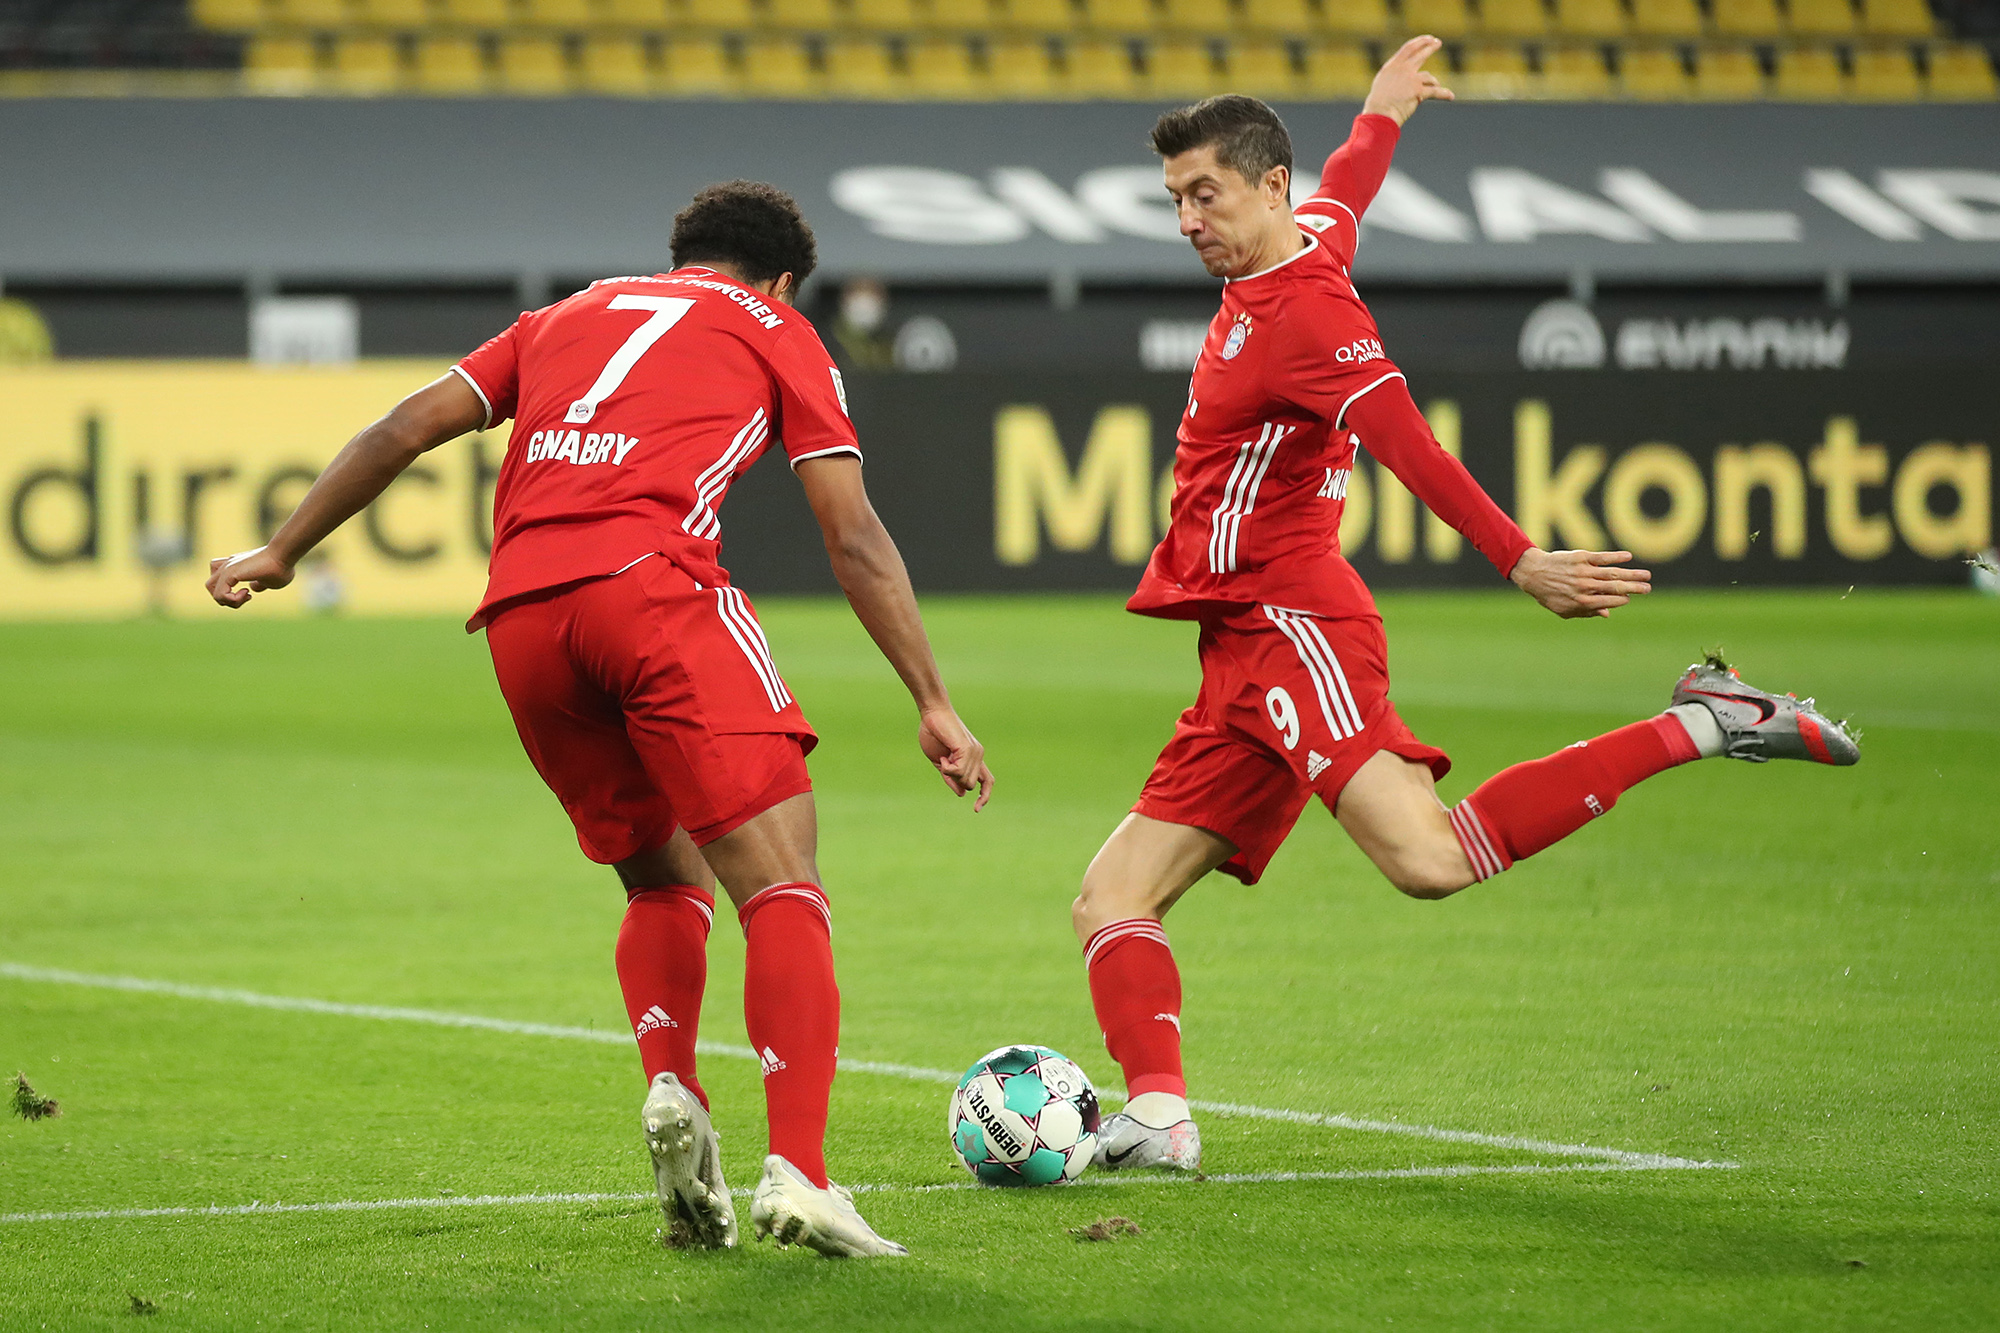 Robert Lewandowski tries to score during a match between Borussia Dortmund and FC Bayern Muenchen in Dortmund, Germany.